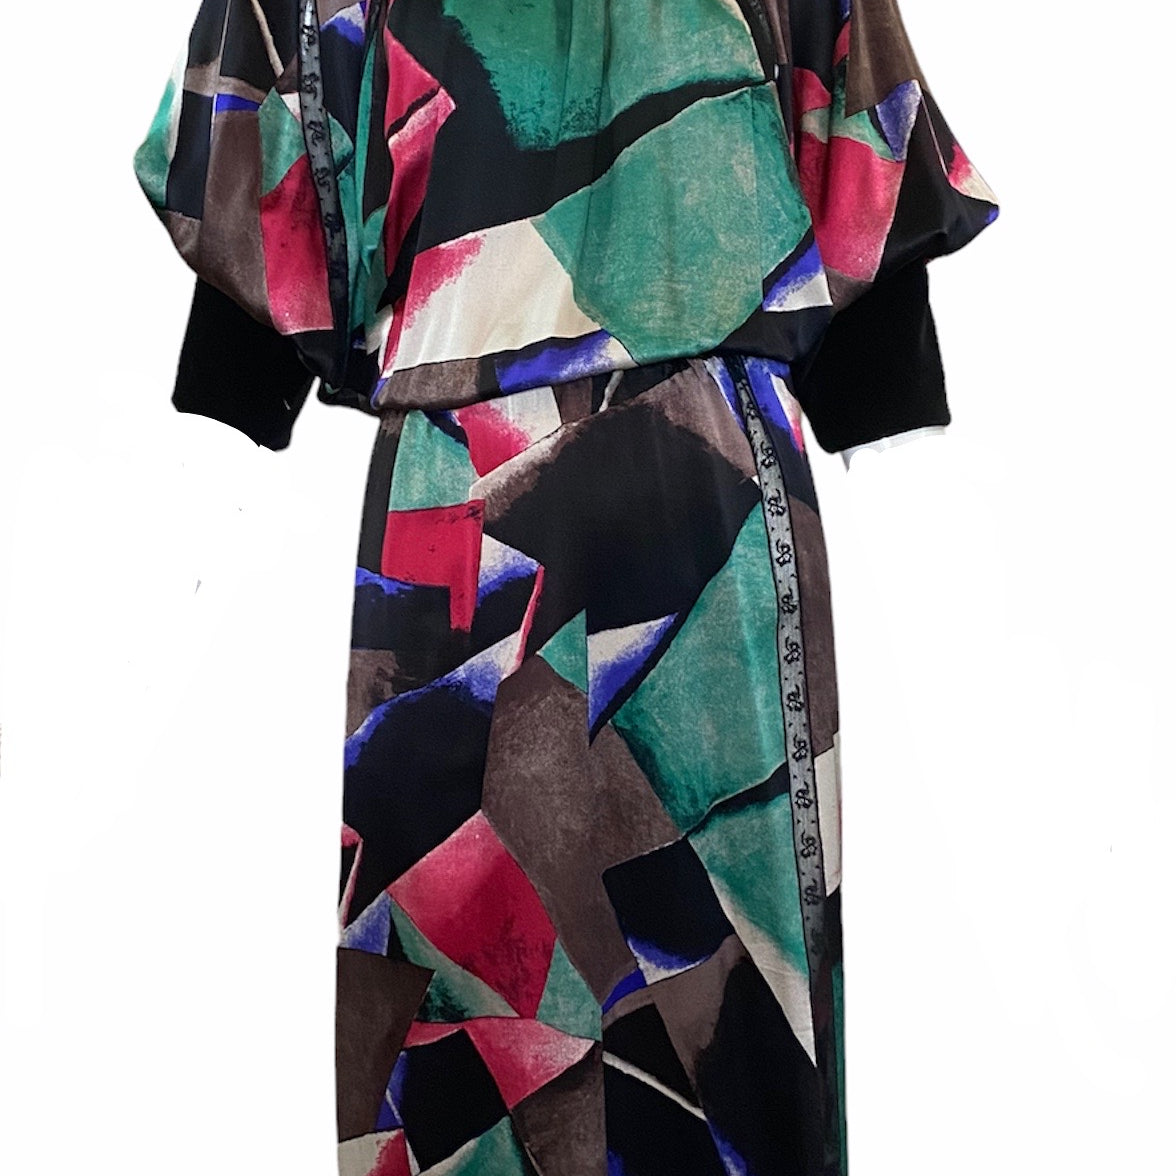  Chloe 80s Silk Print Dress with Velvet Trim FRONT 1 o 6